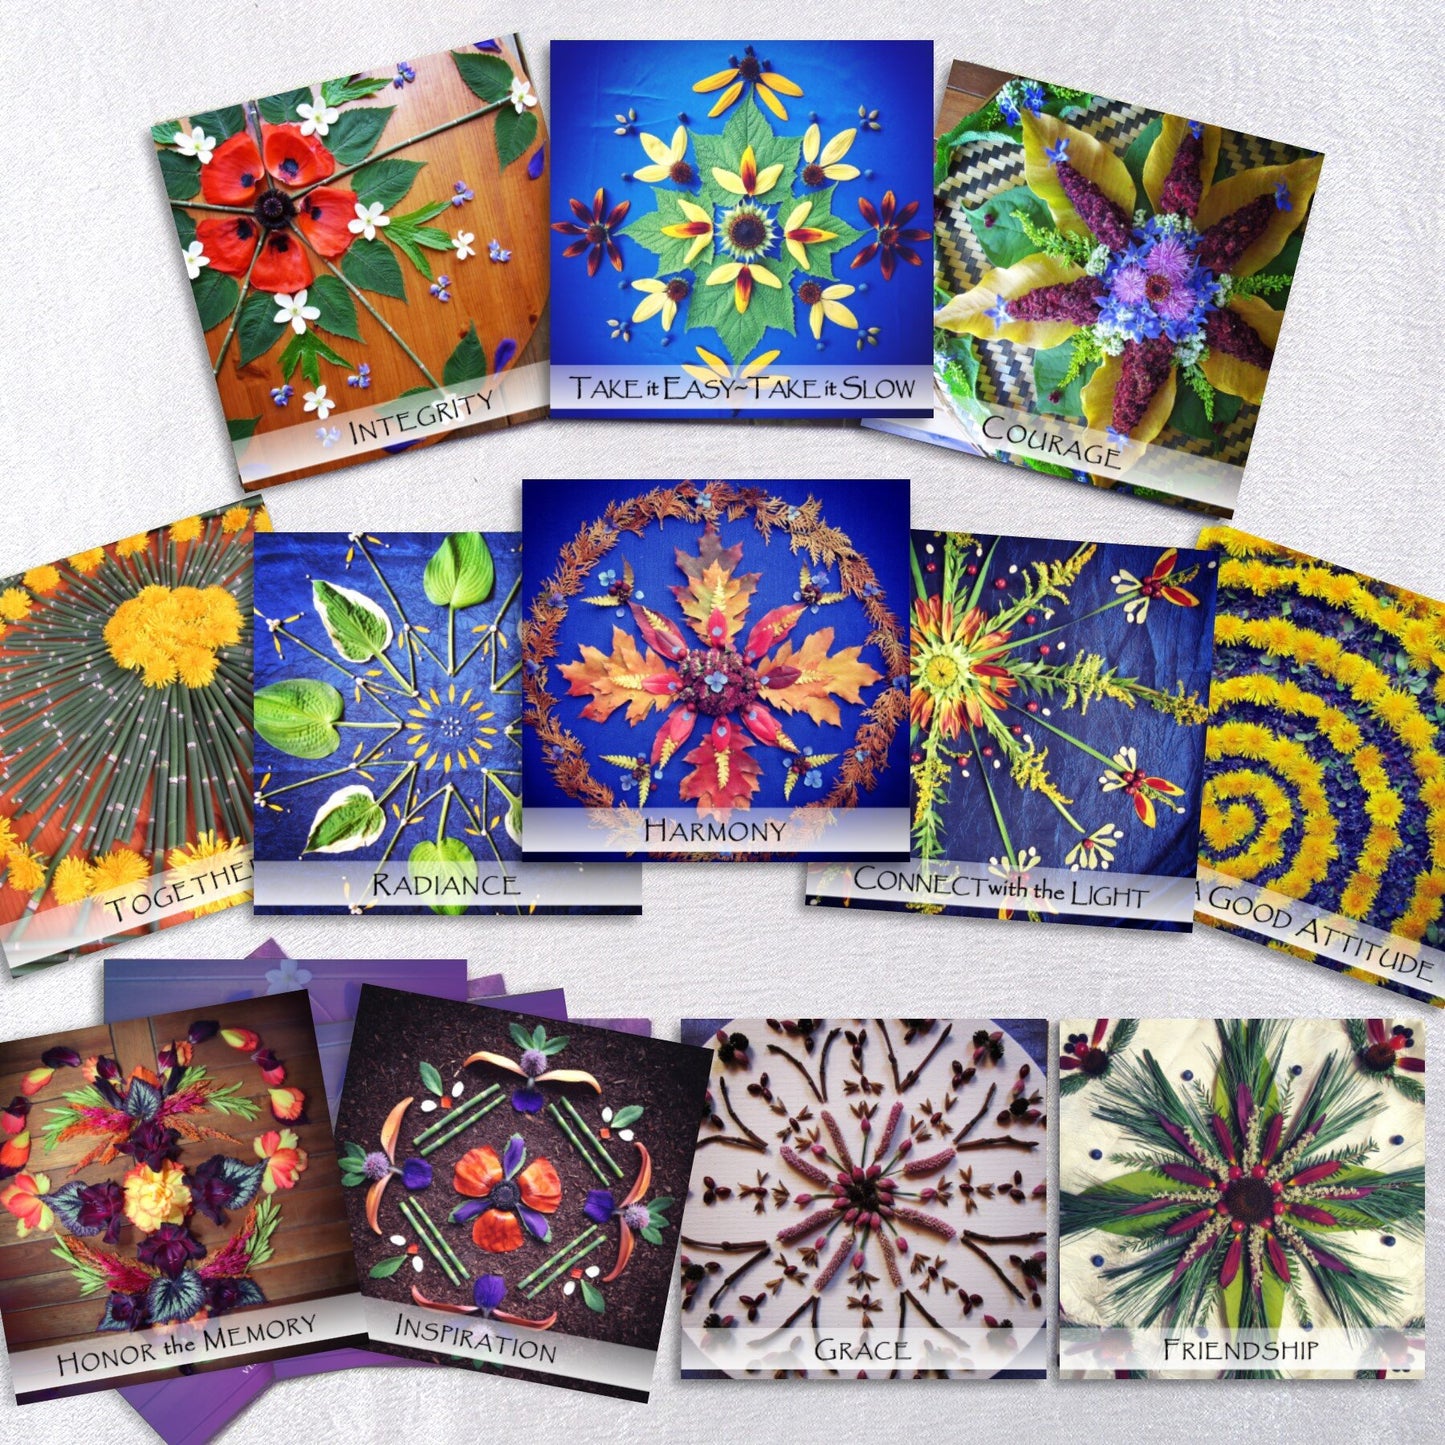 Nature Mandala Meditation Cards